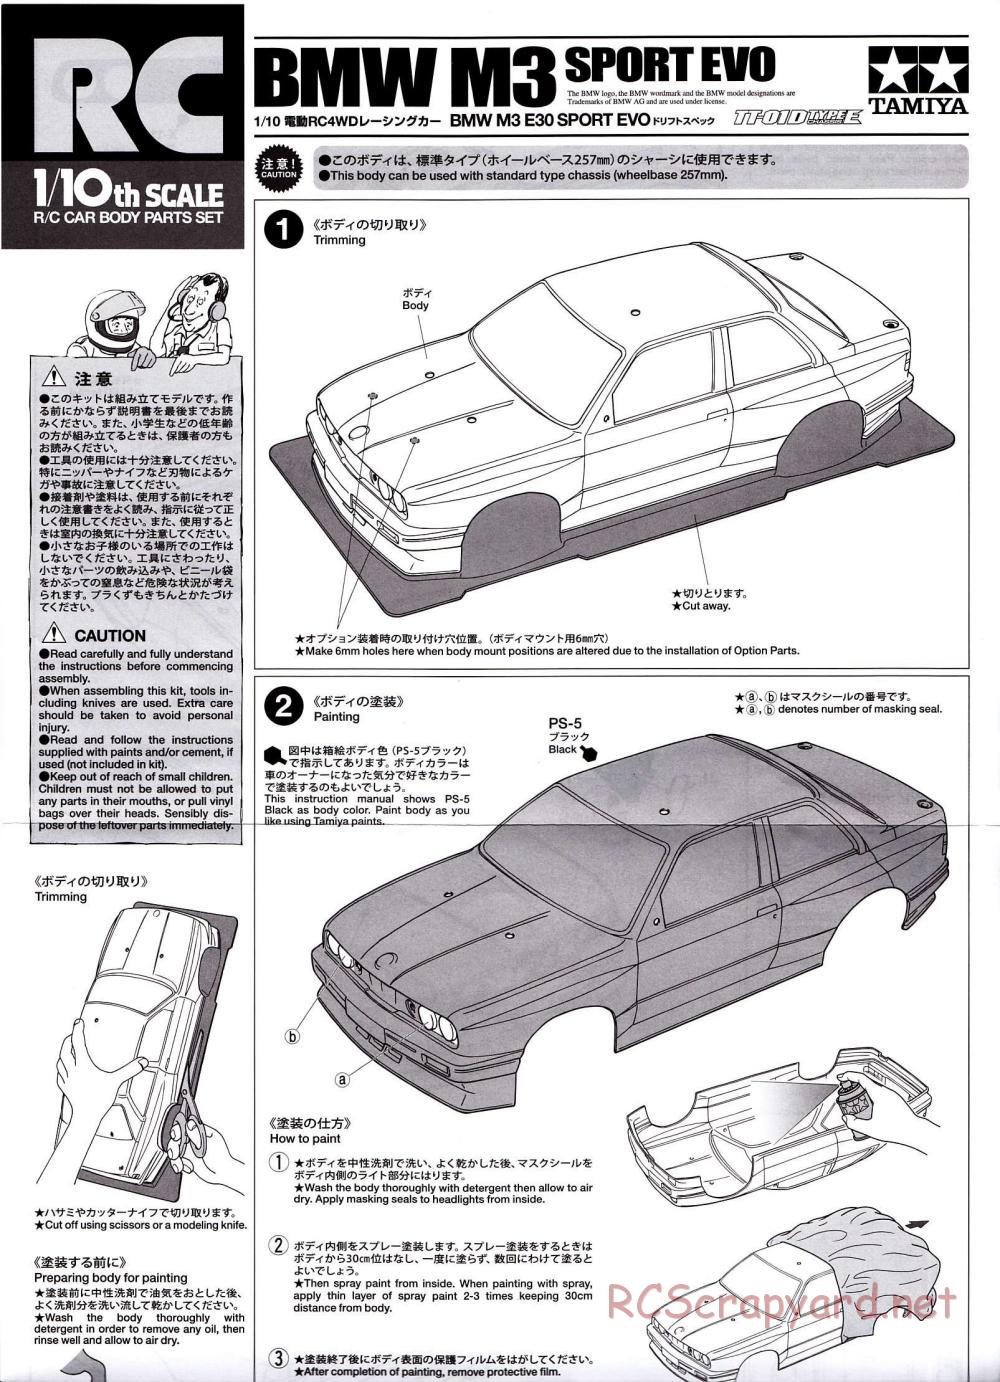 Tamiya - BMW M3 E30 Sport Evo - Drift Spec - TT-01ED Chassis - Body Manual - Page 1